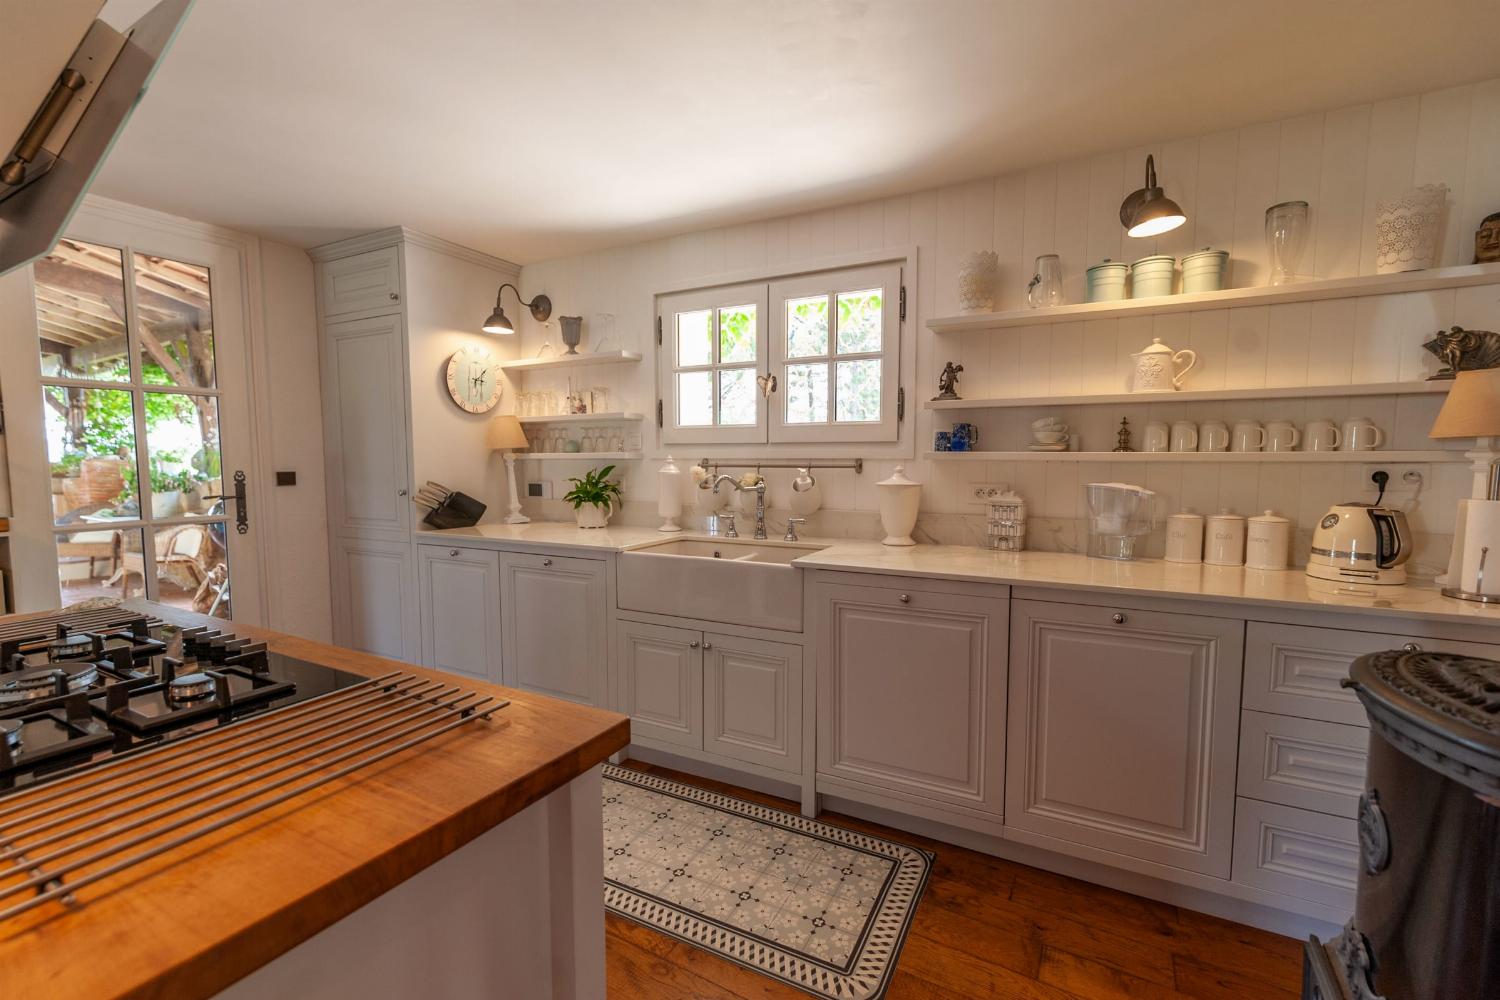 Kitchen | Rental home in Lot-et-Garonne